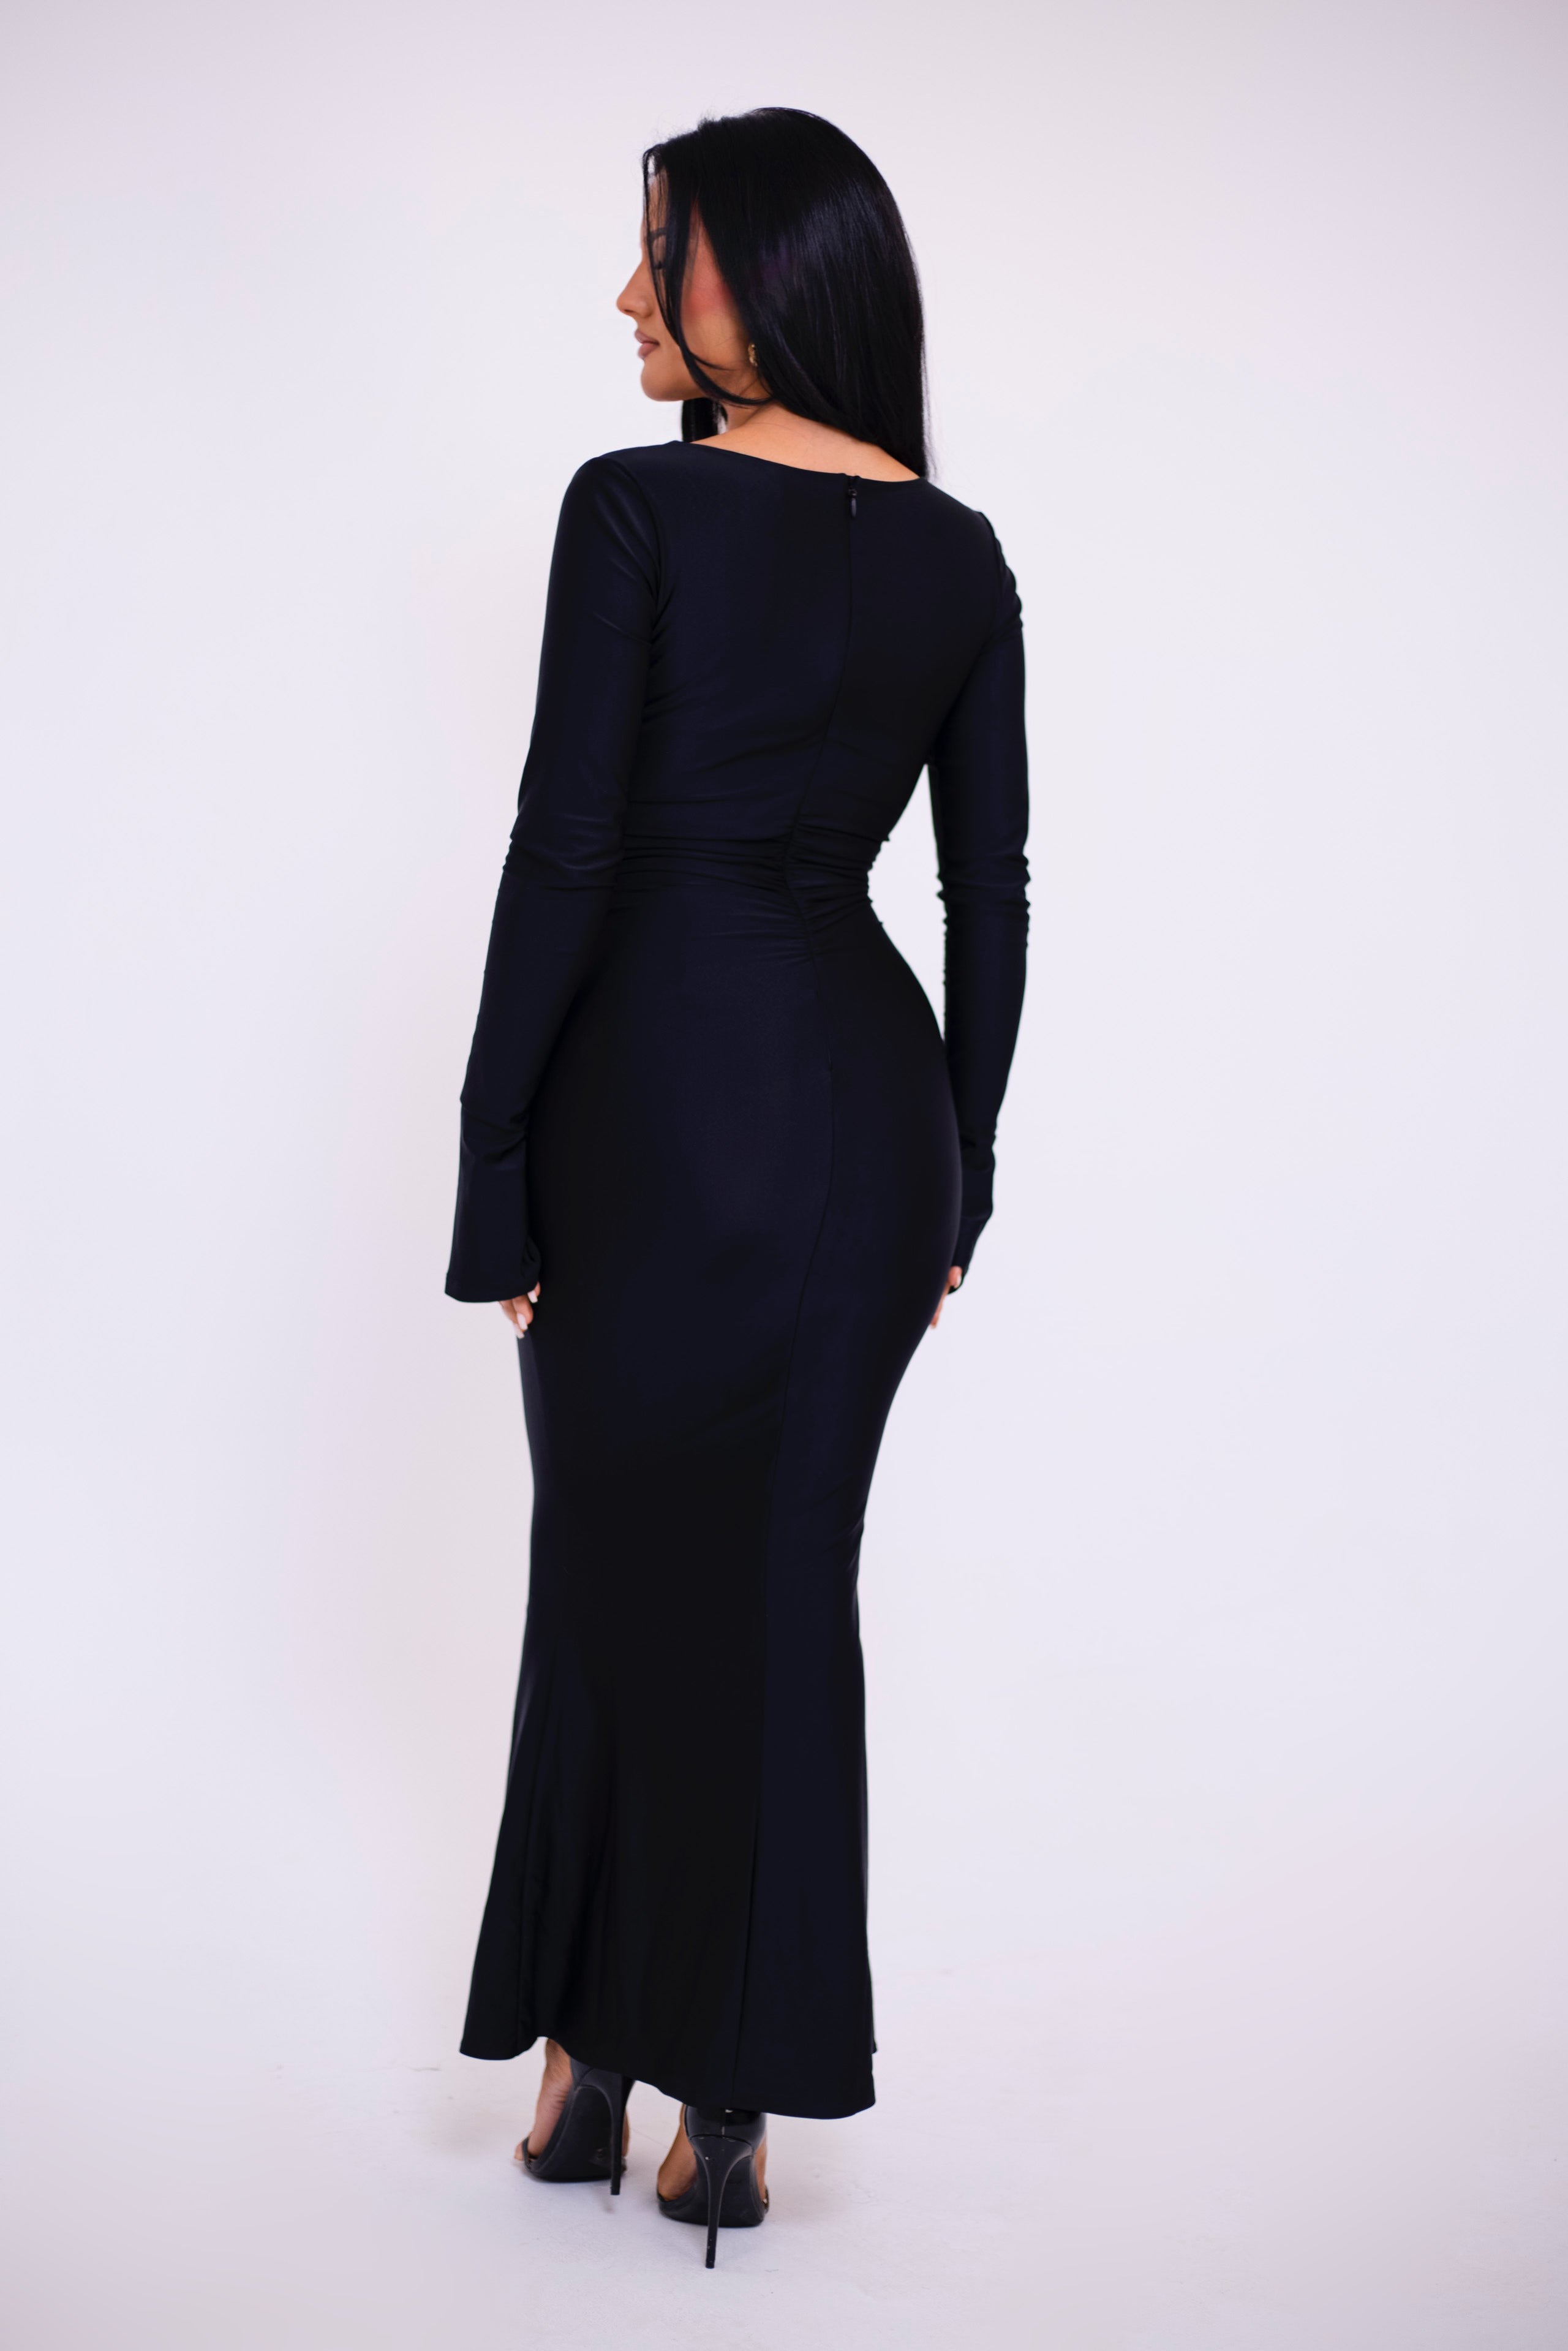 Sereia Black Dress